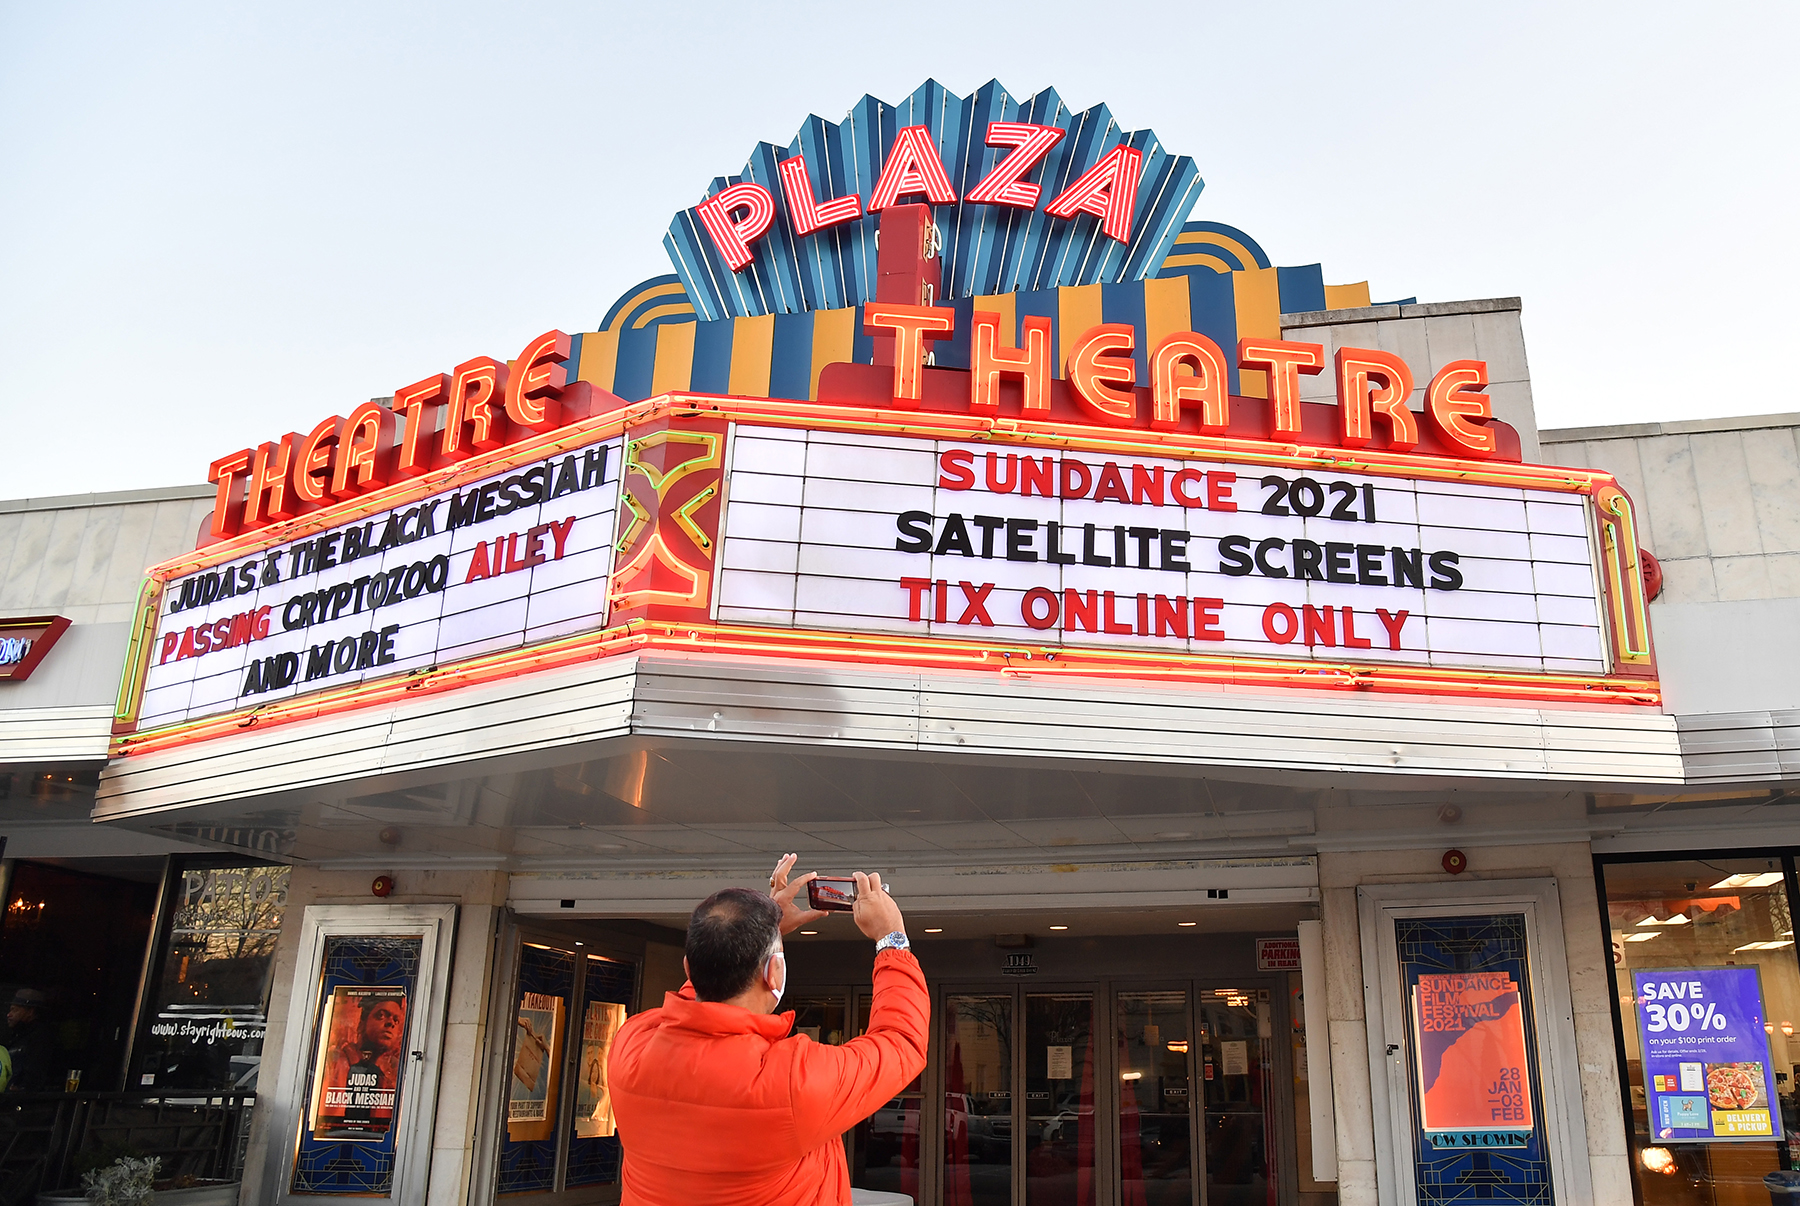 The Plaza Theatre In Atlanta, Georgia Participates In The 2021 Sundance Film Festival Satellite Screening Series